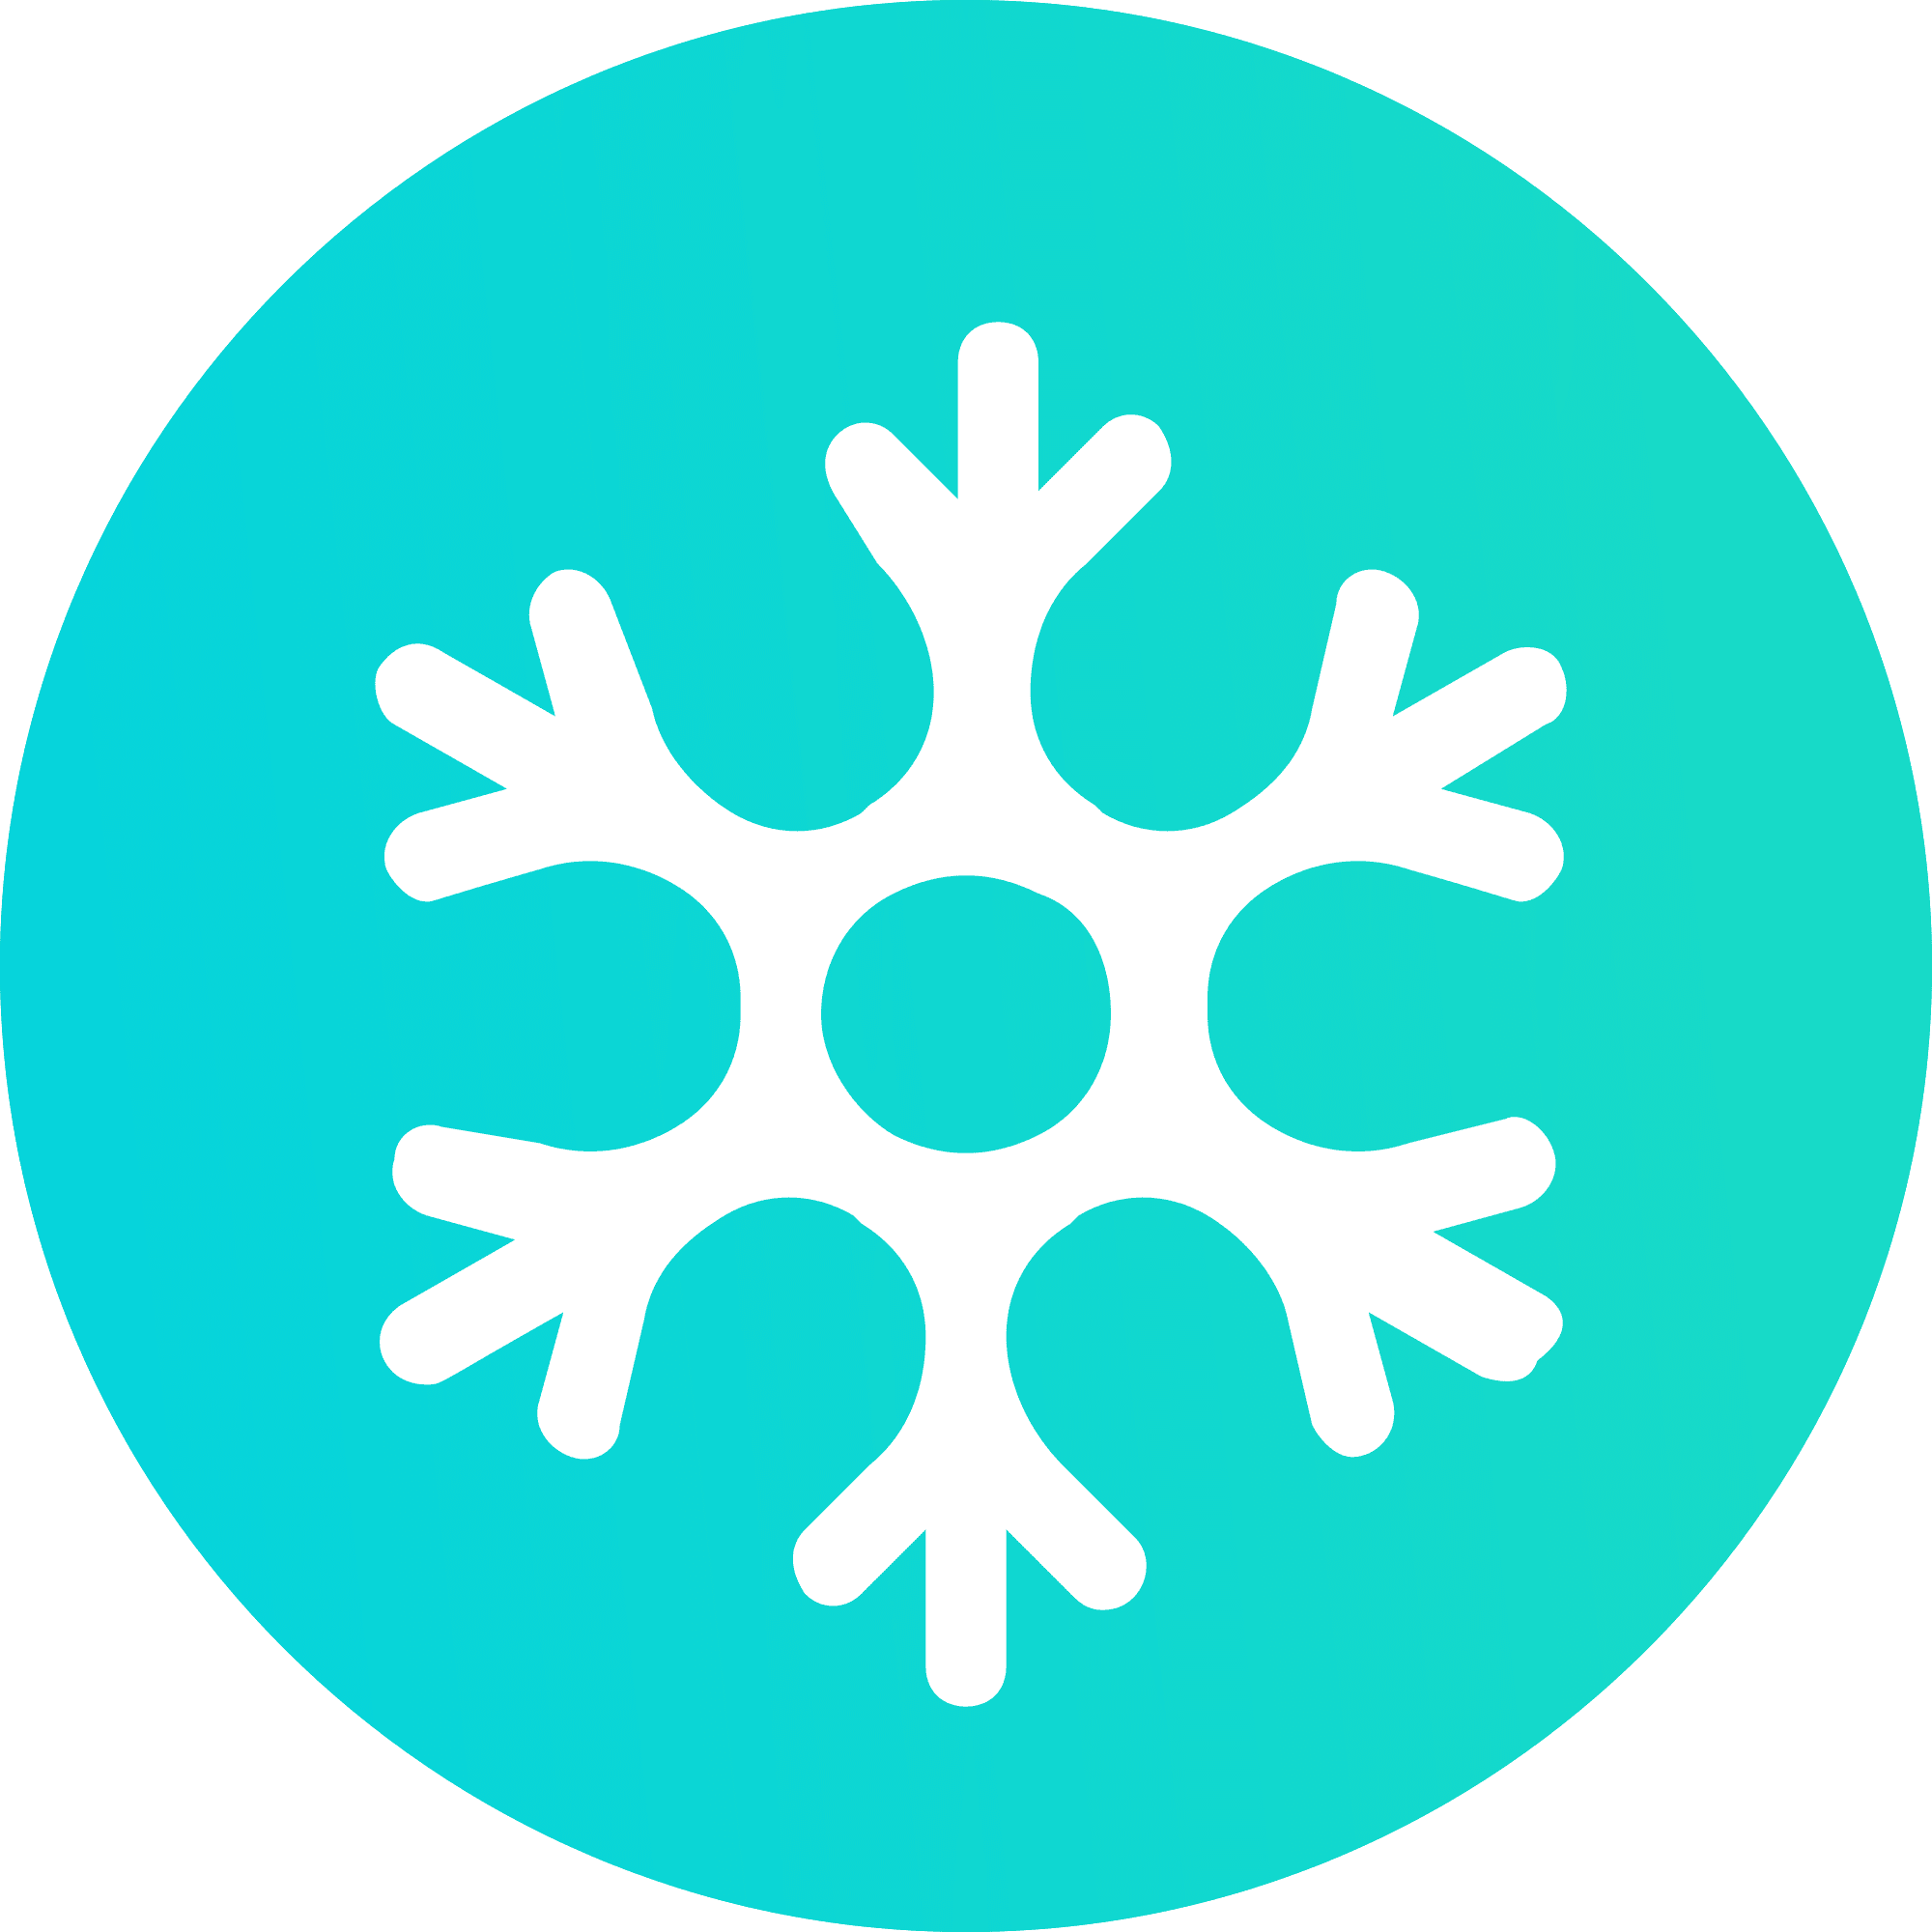 SnowSwap logo in png format